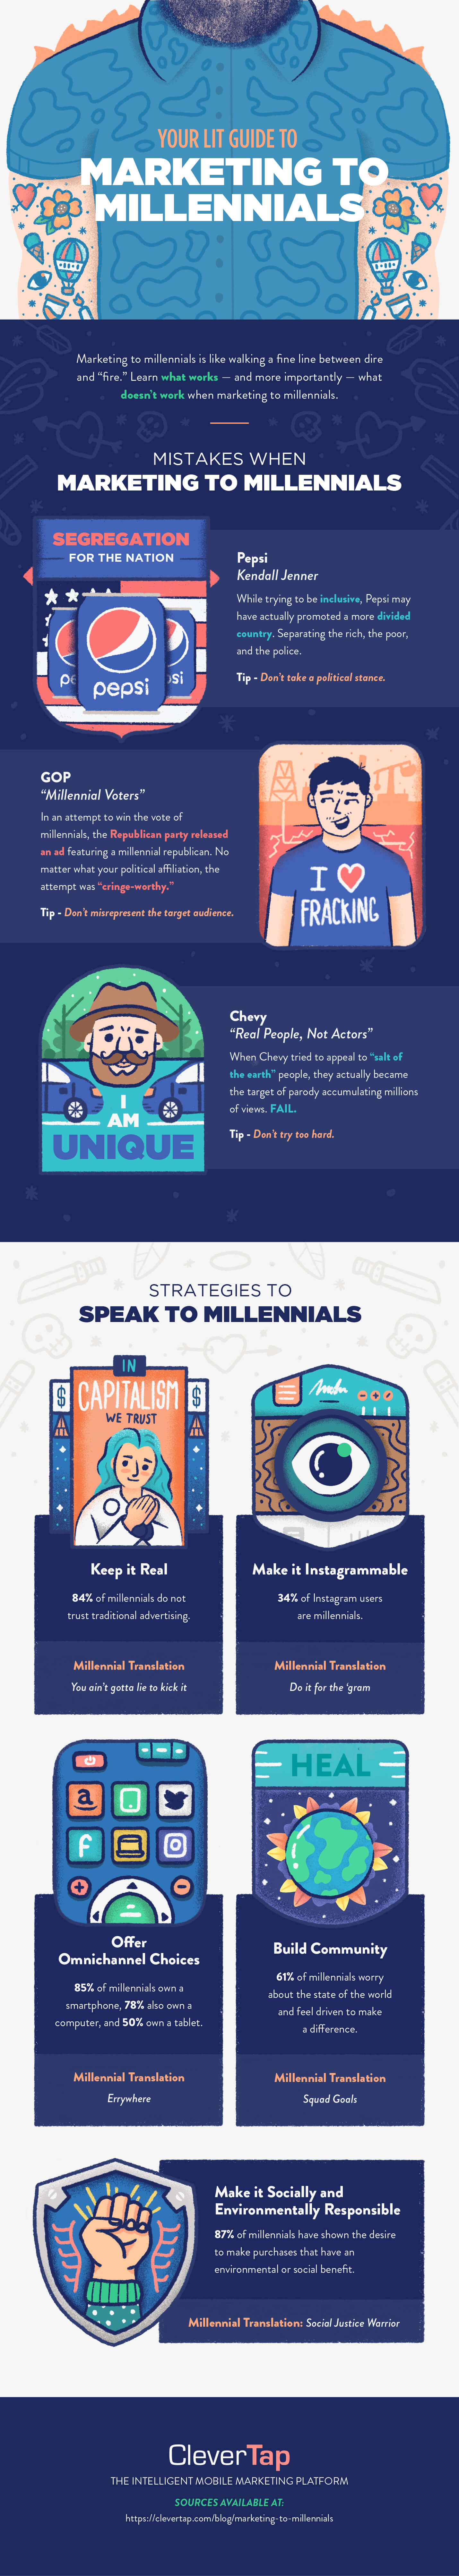 The Secret to Marketing to Millennials